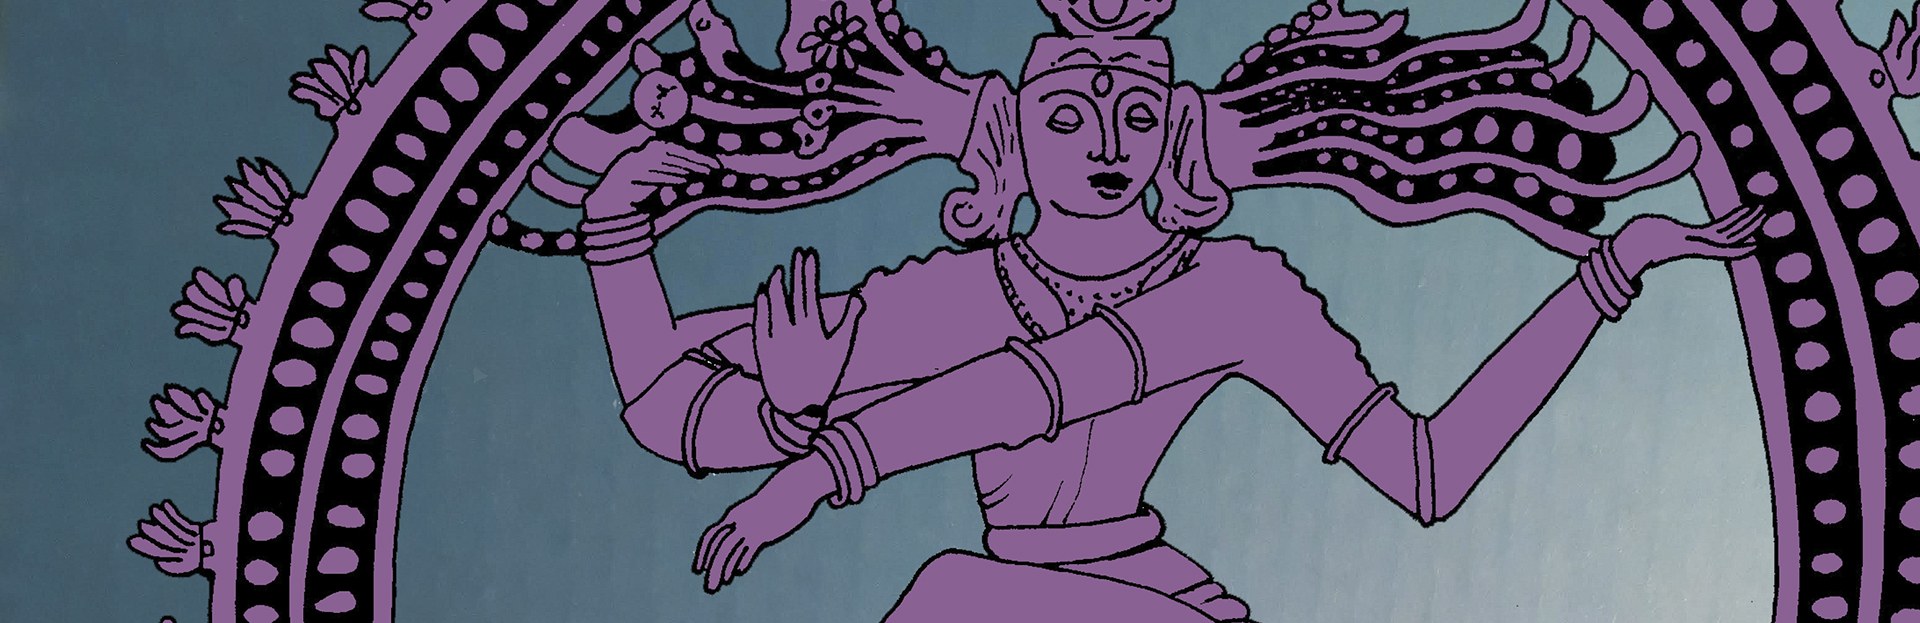 Juego - Acompañá la danza cósmica de Shiva Nataraja a través de este tetris hexagonal